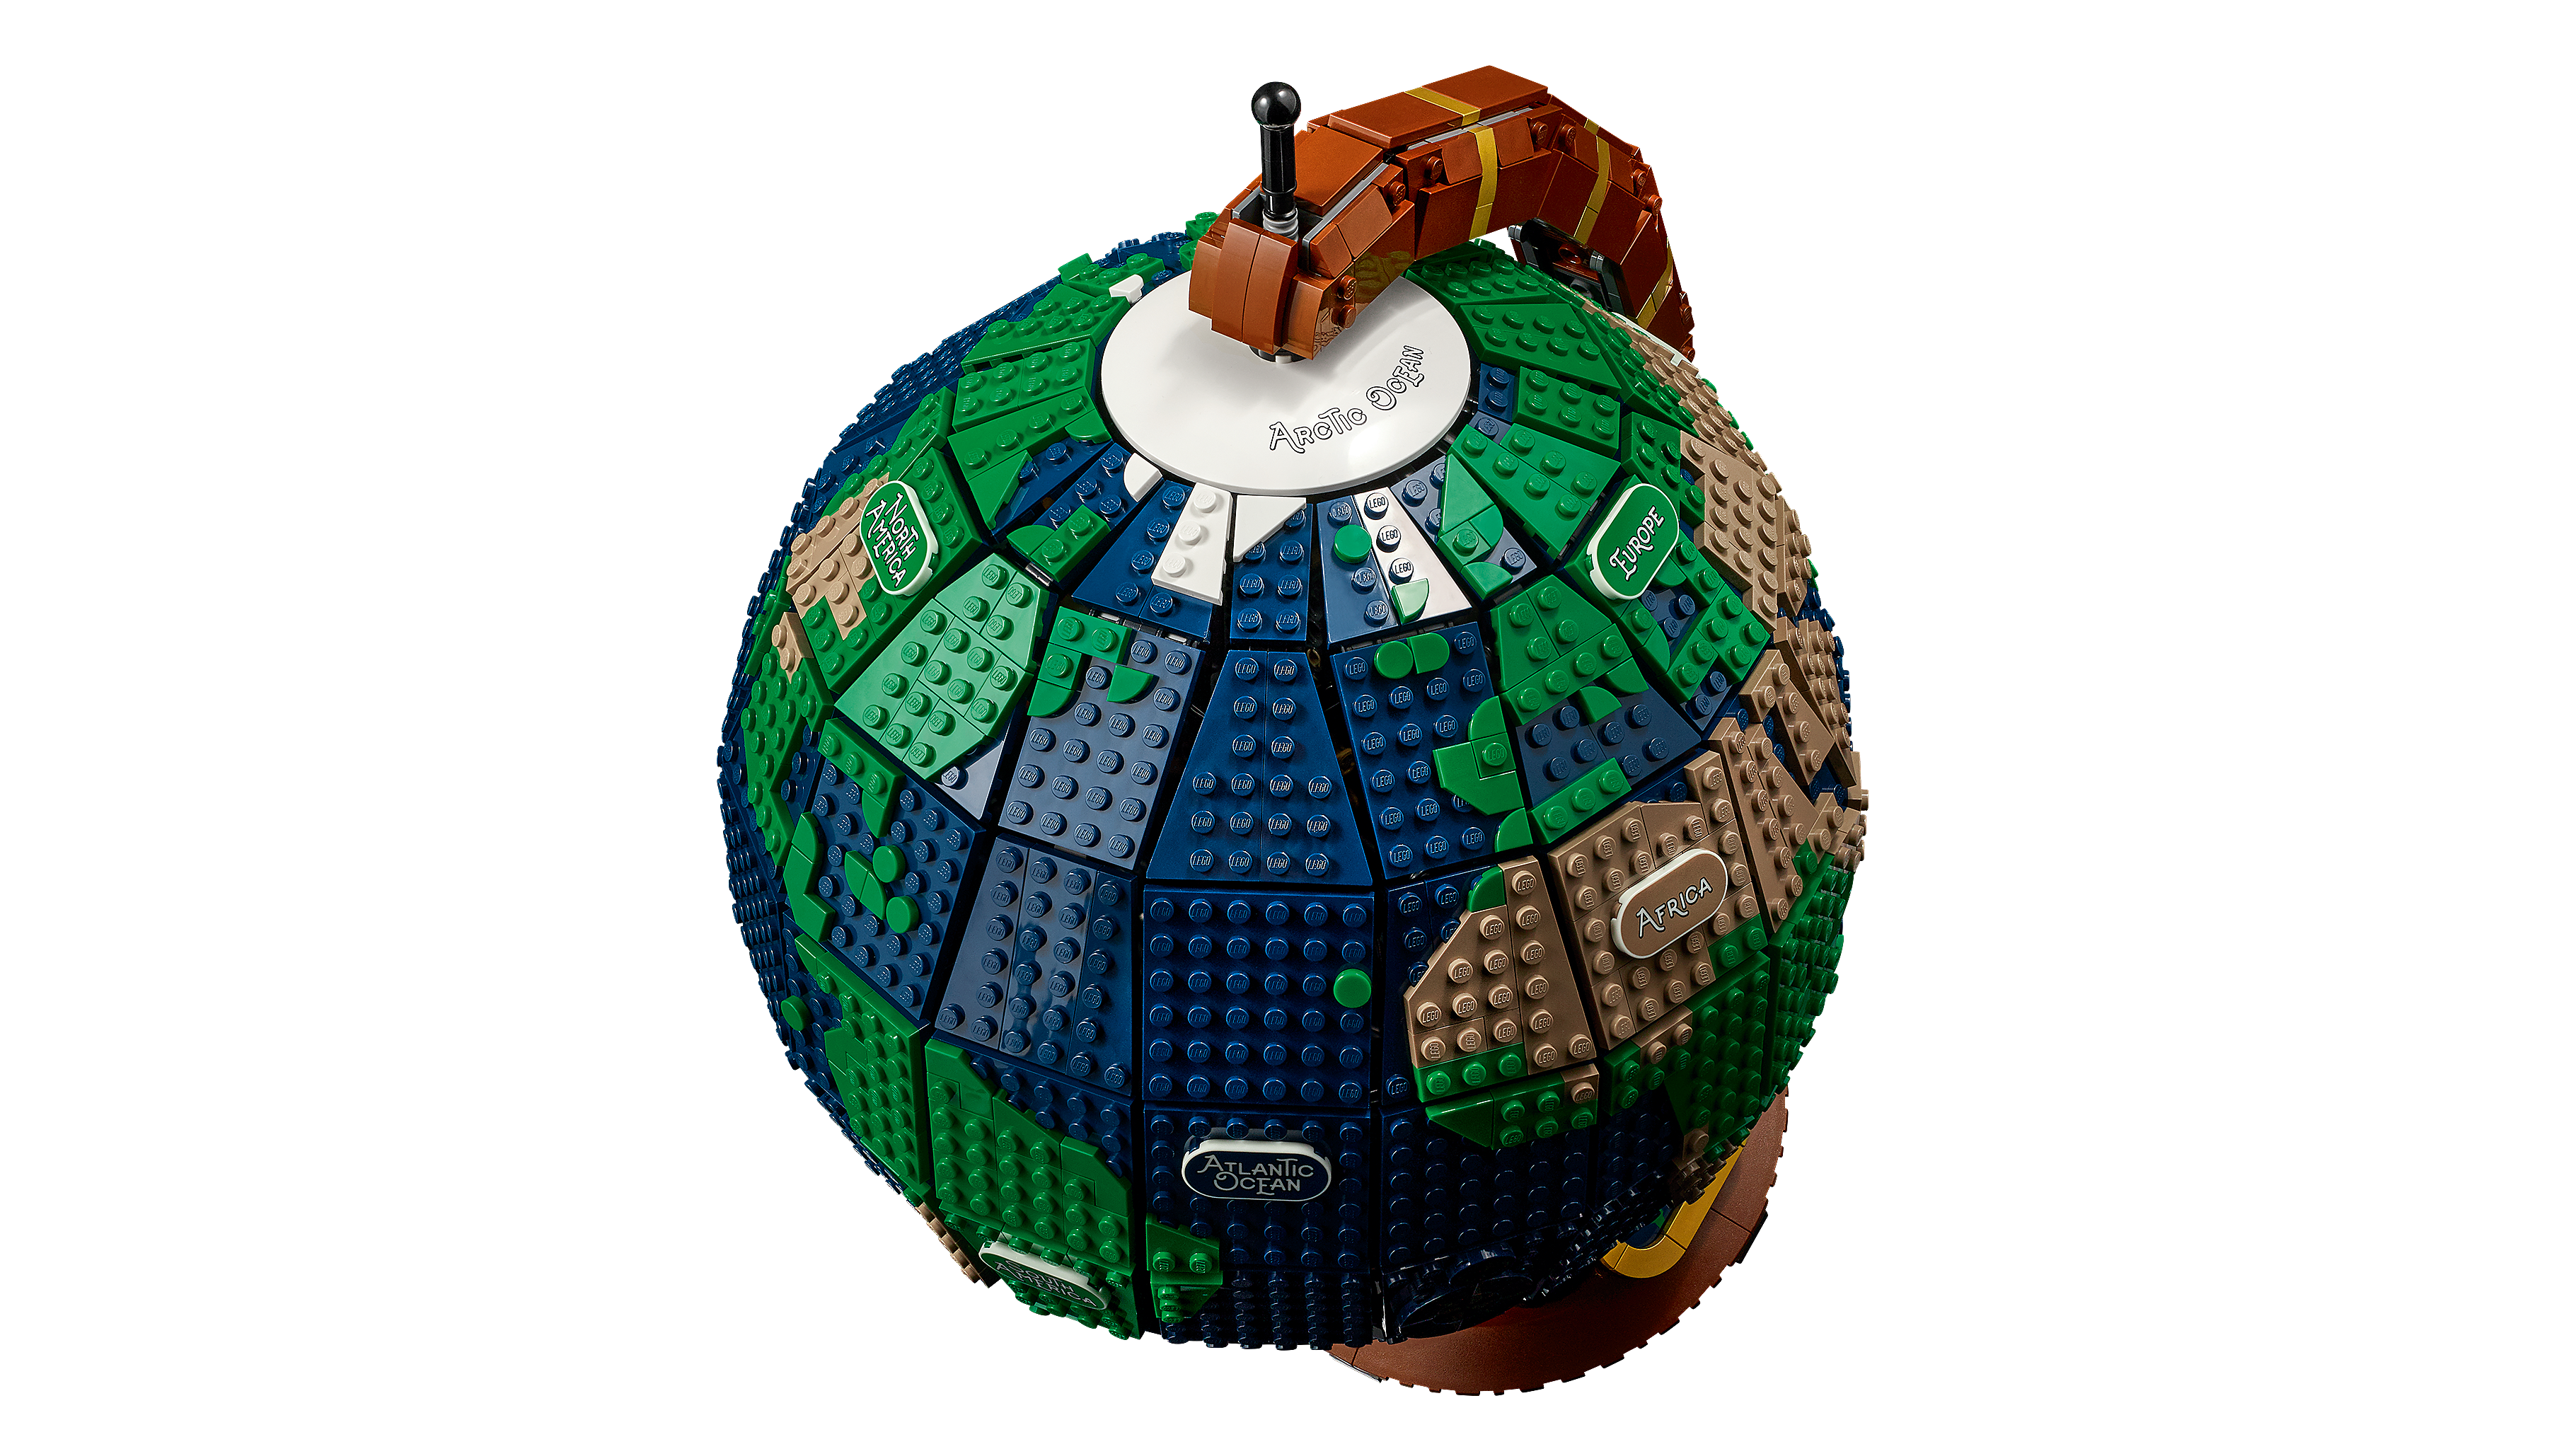 LEGO GLOBE TERRESTRE SET 21332~2585 PCS~NEW IN FACTORY SEALED BOX~FREE  SHIPPING!